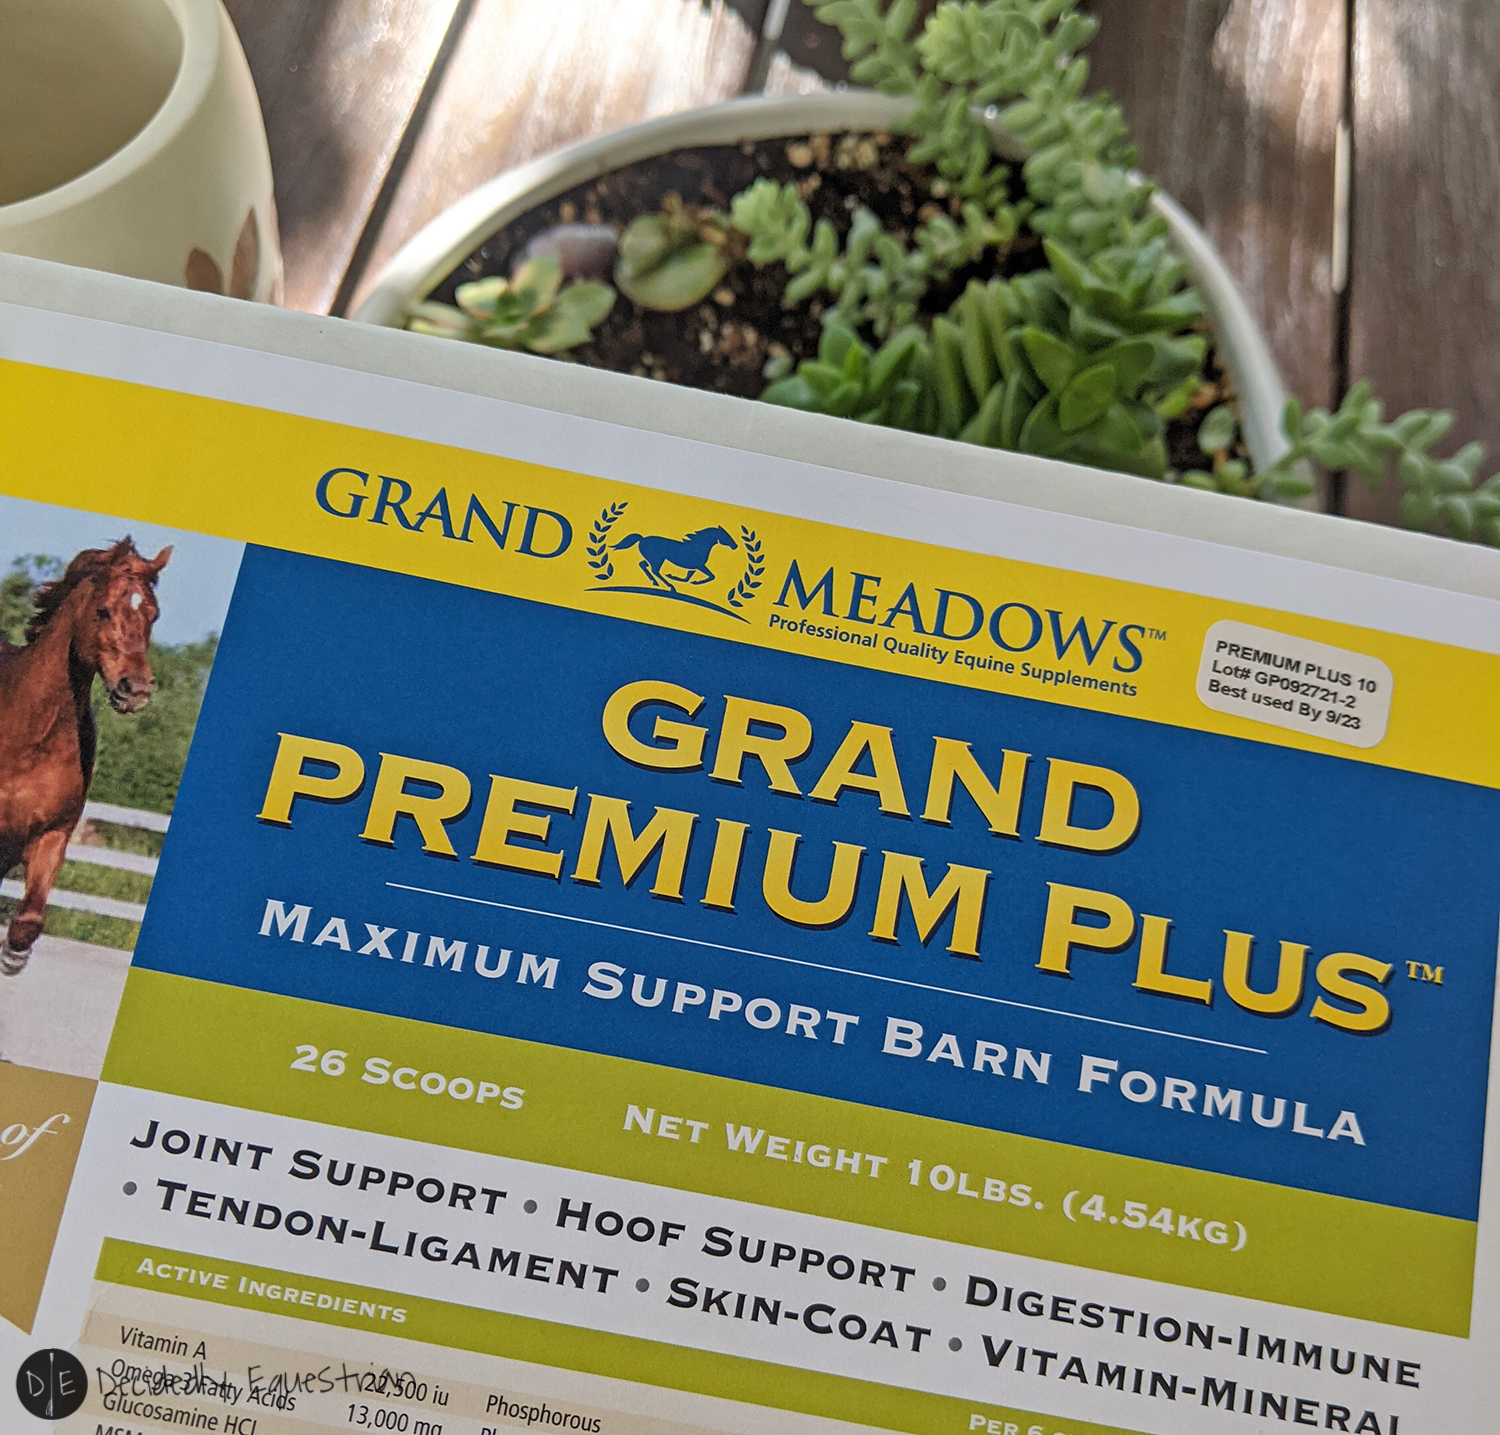 Grand Meadows Grand Premium Plus Review